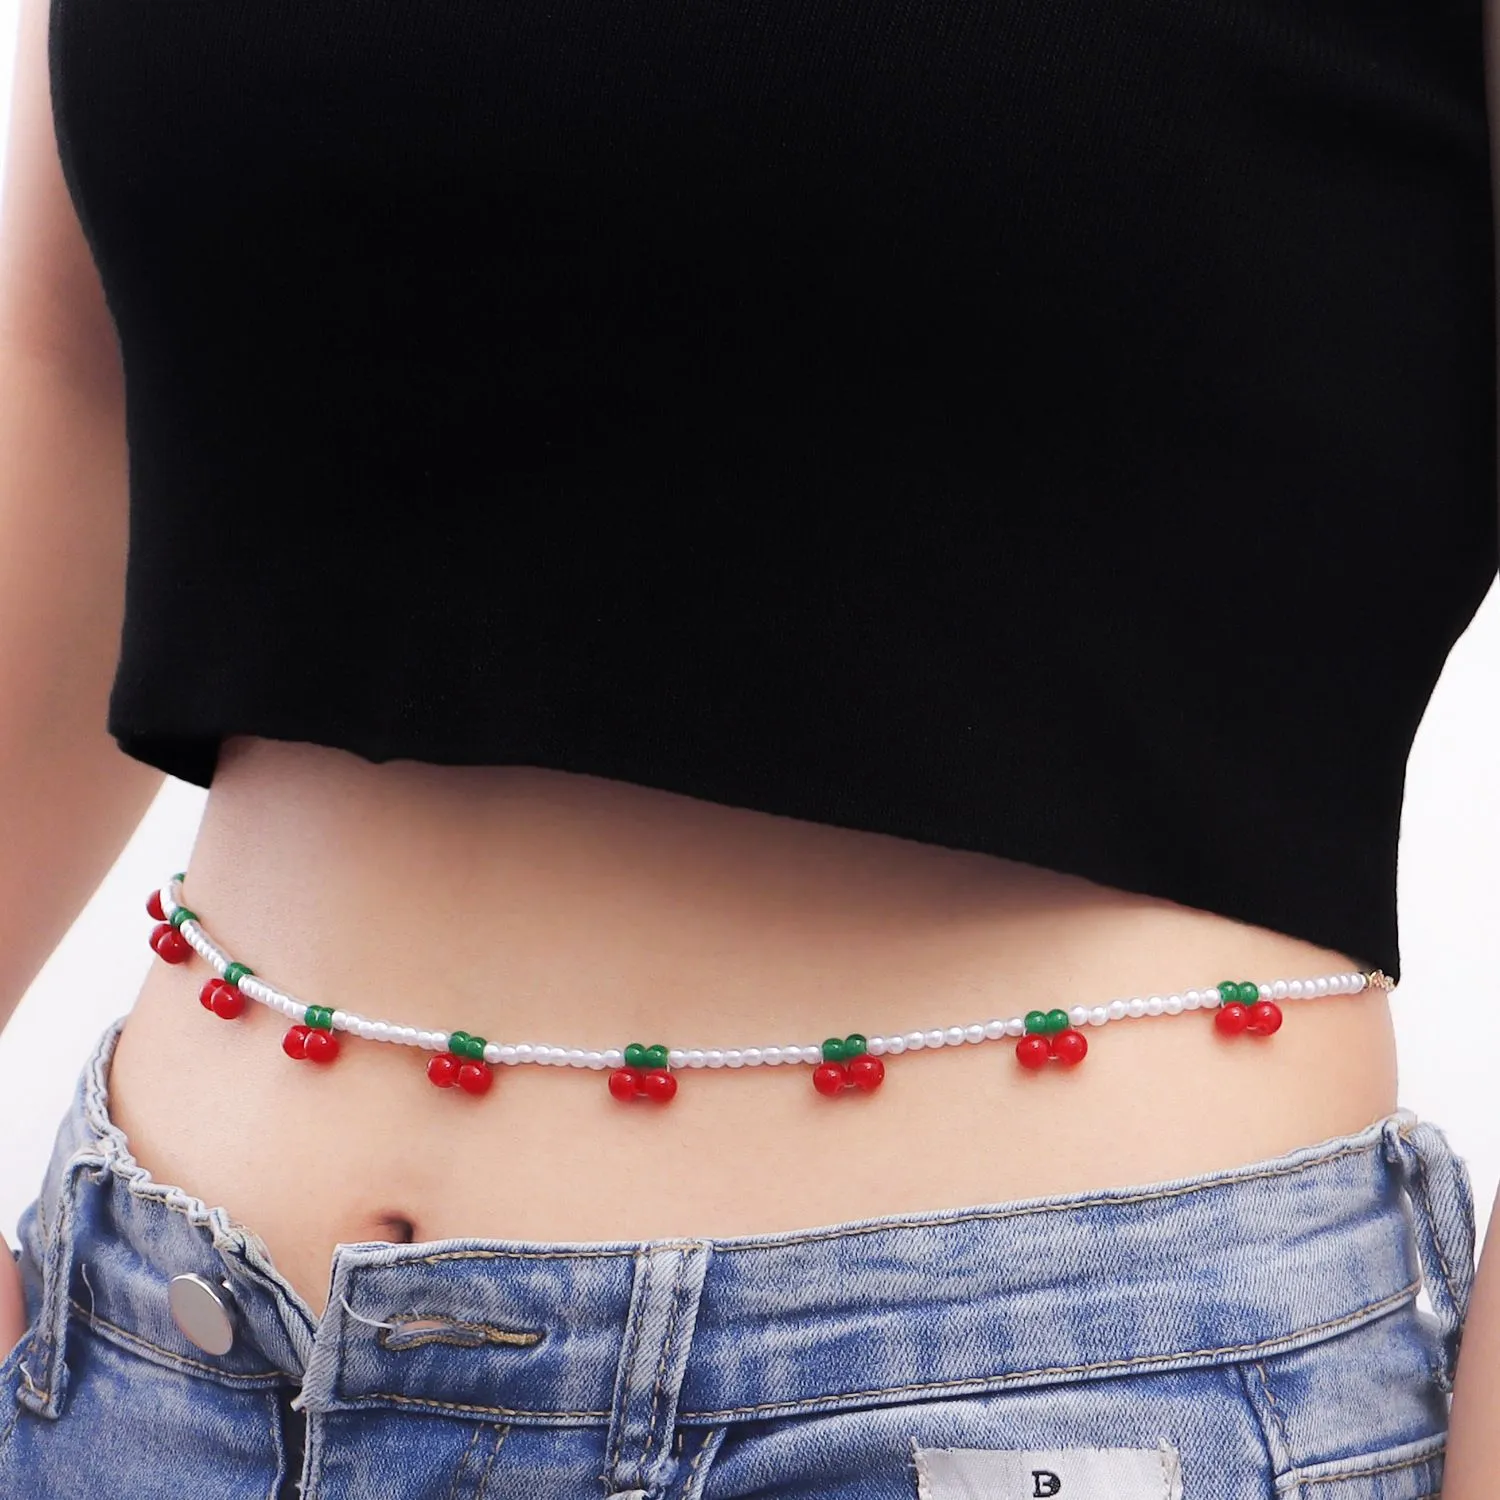 Cherry Body Chain for Bra Bikini Cute Body Jewelry for Wedding  Accessories 2268